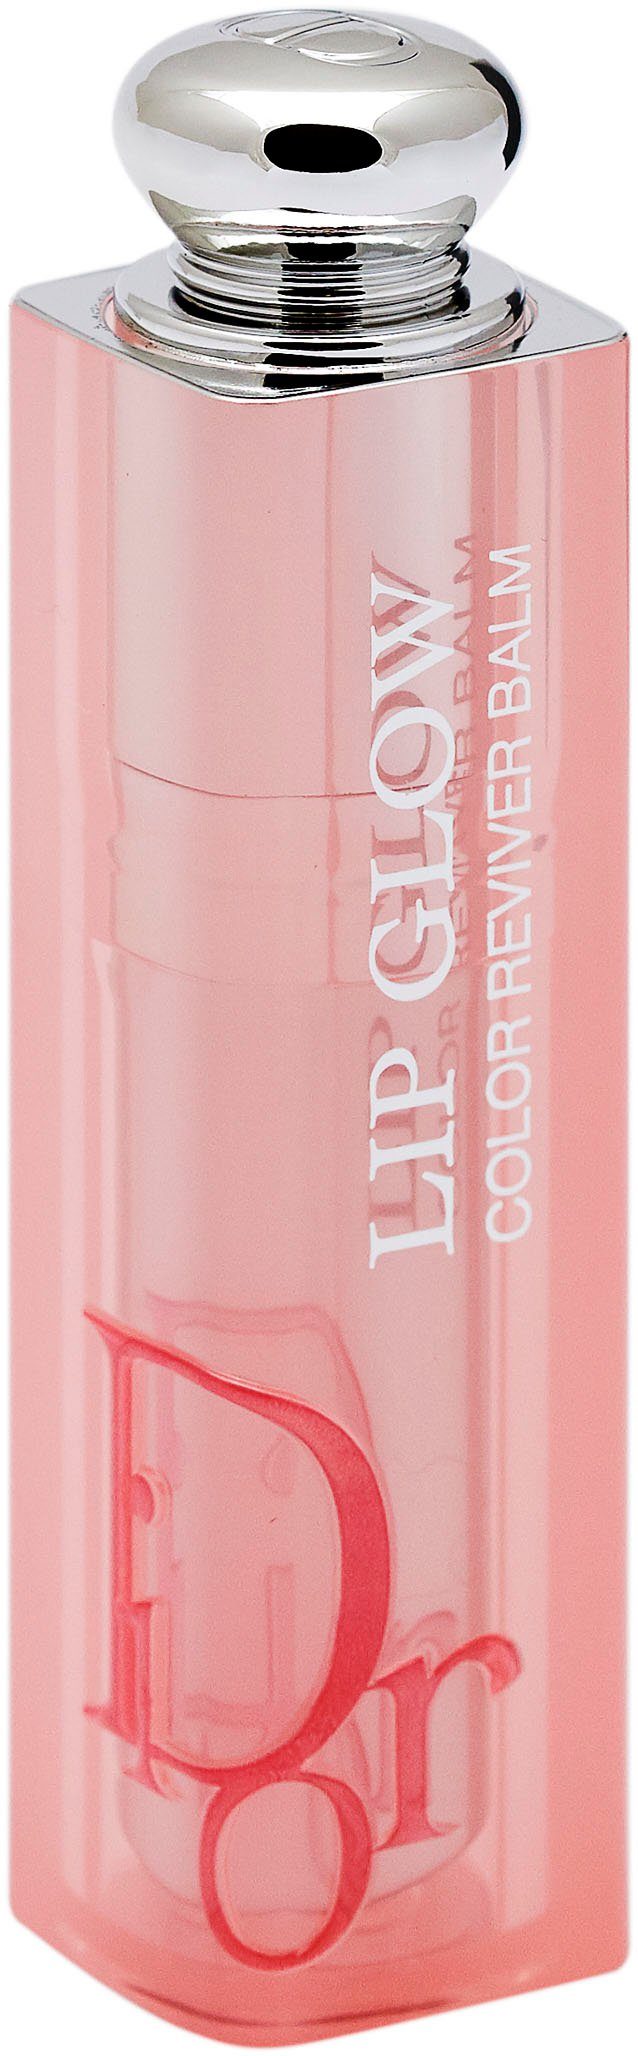 Dior Lippenbalsam Dior Glow Addict Lip Pink 001